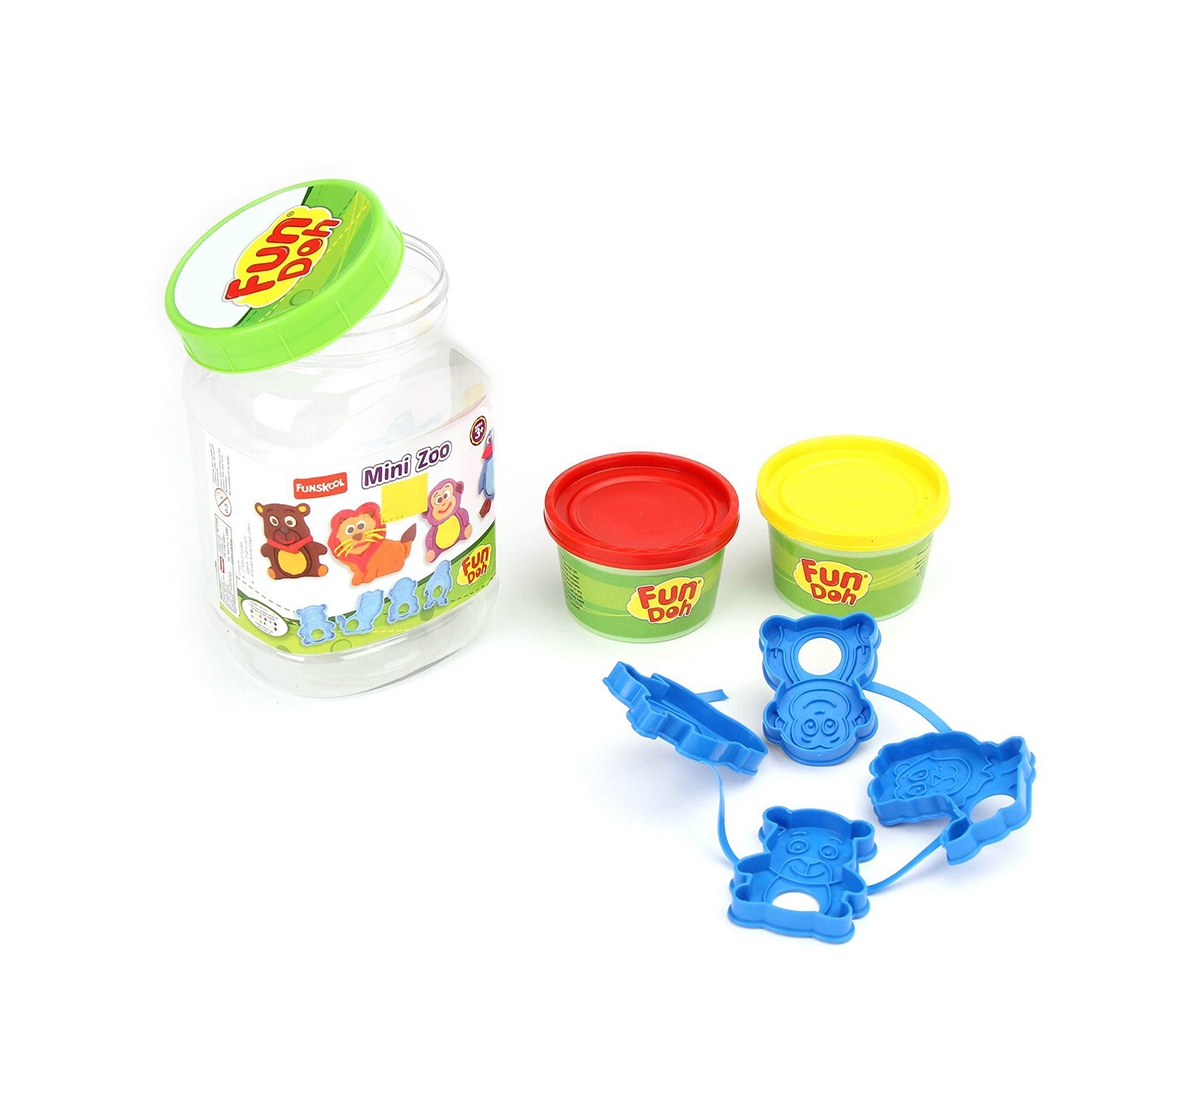 Fun-Dough | Fun Dough Mini Zoo Clay & Dough for Kids Age 3Y+ 2